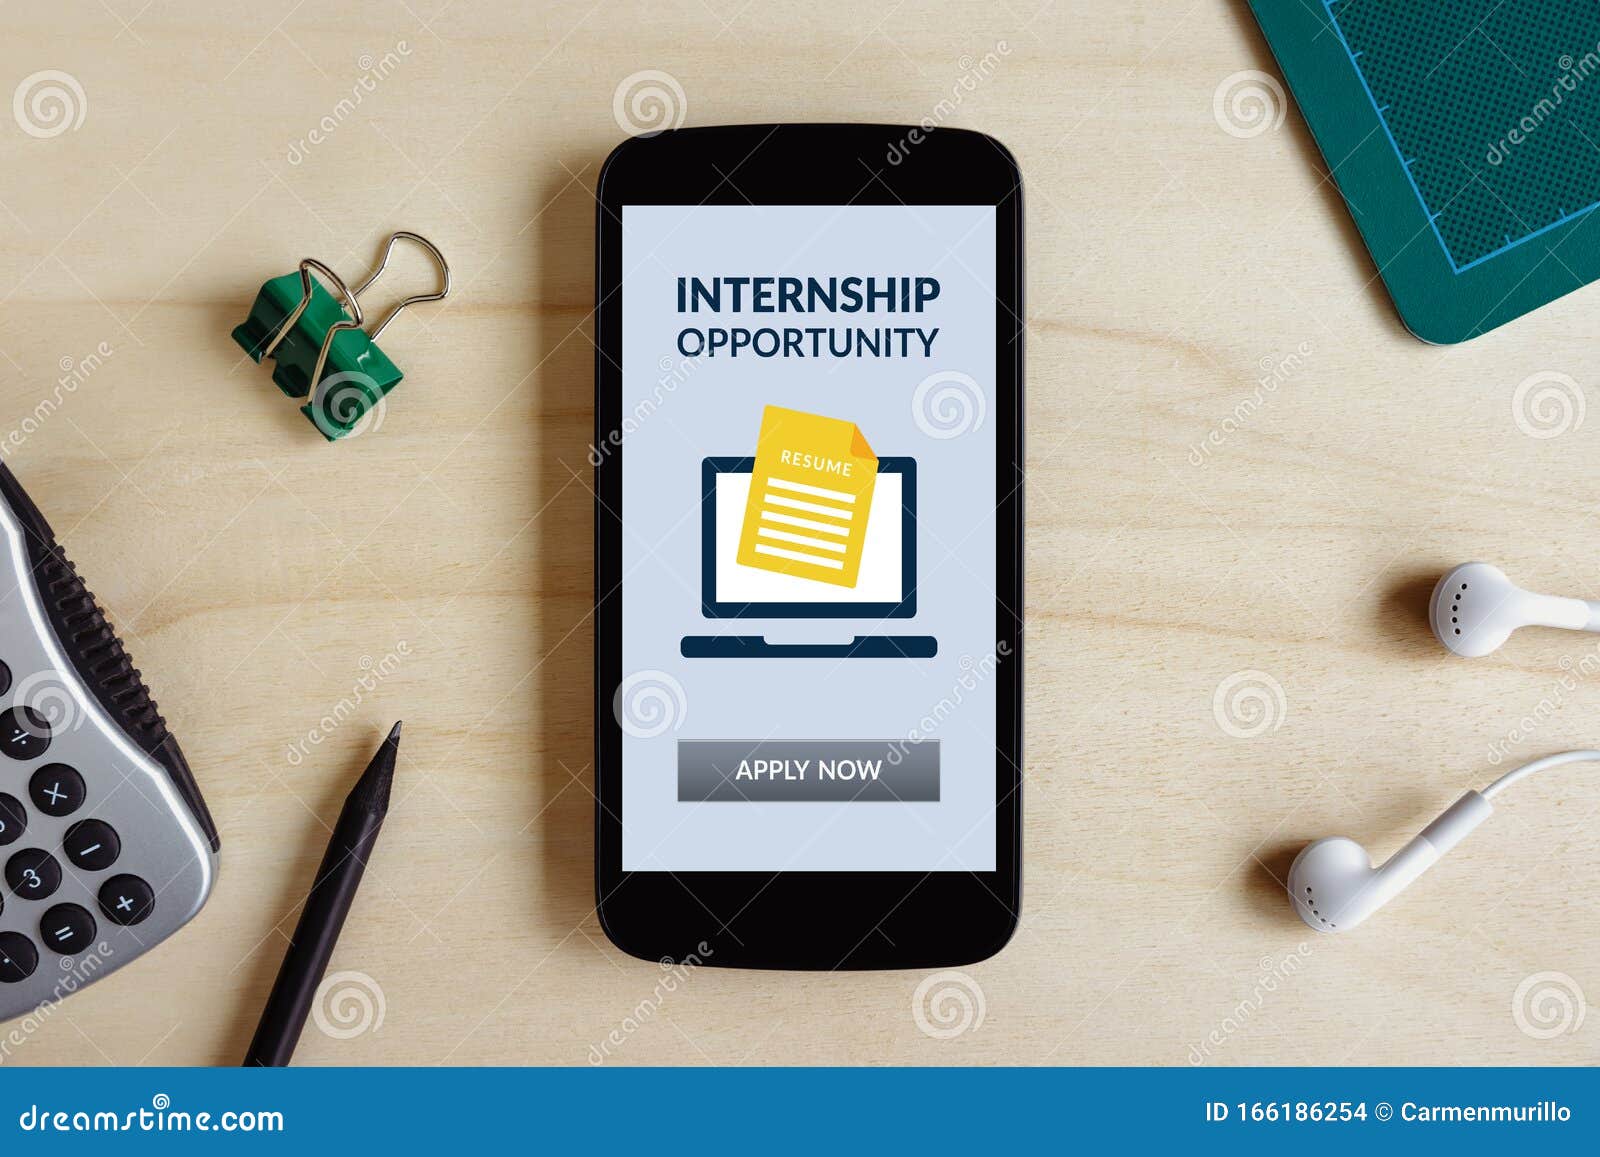 internship concept on smart phone screen